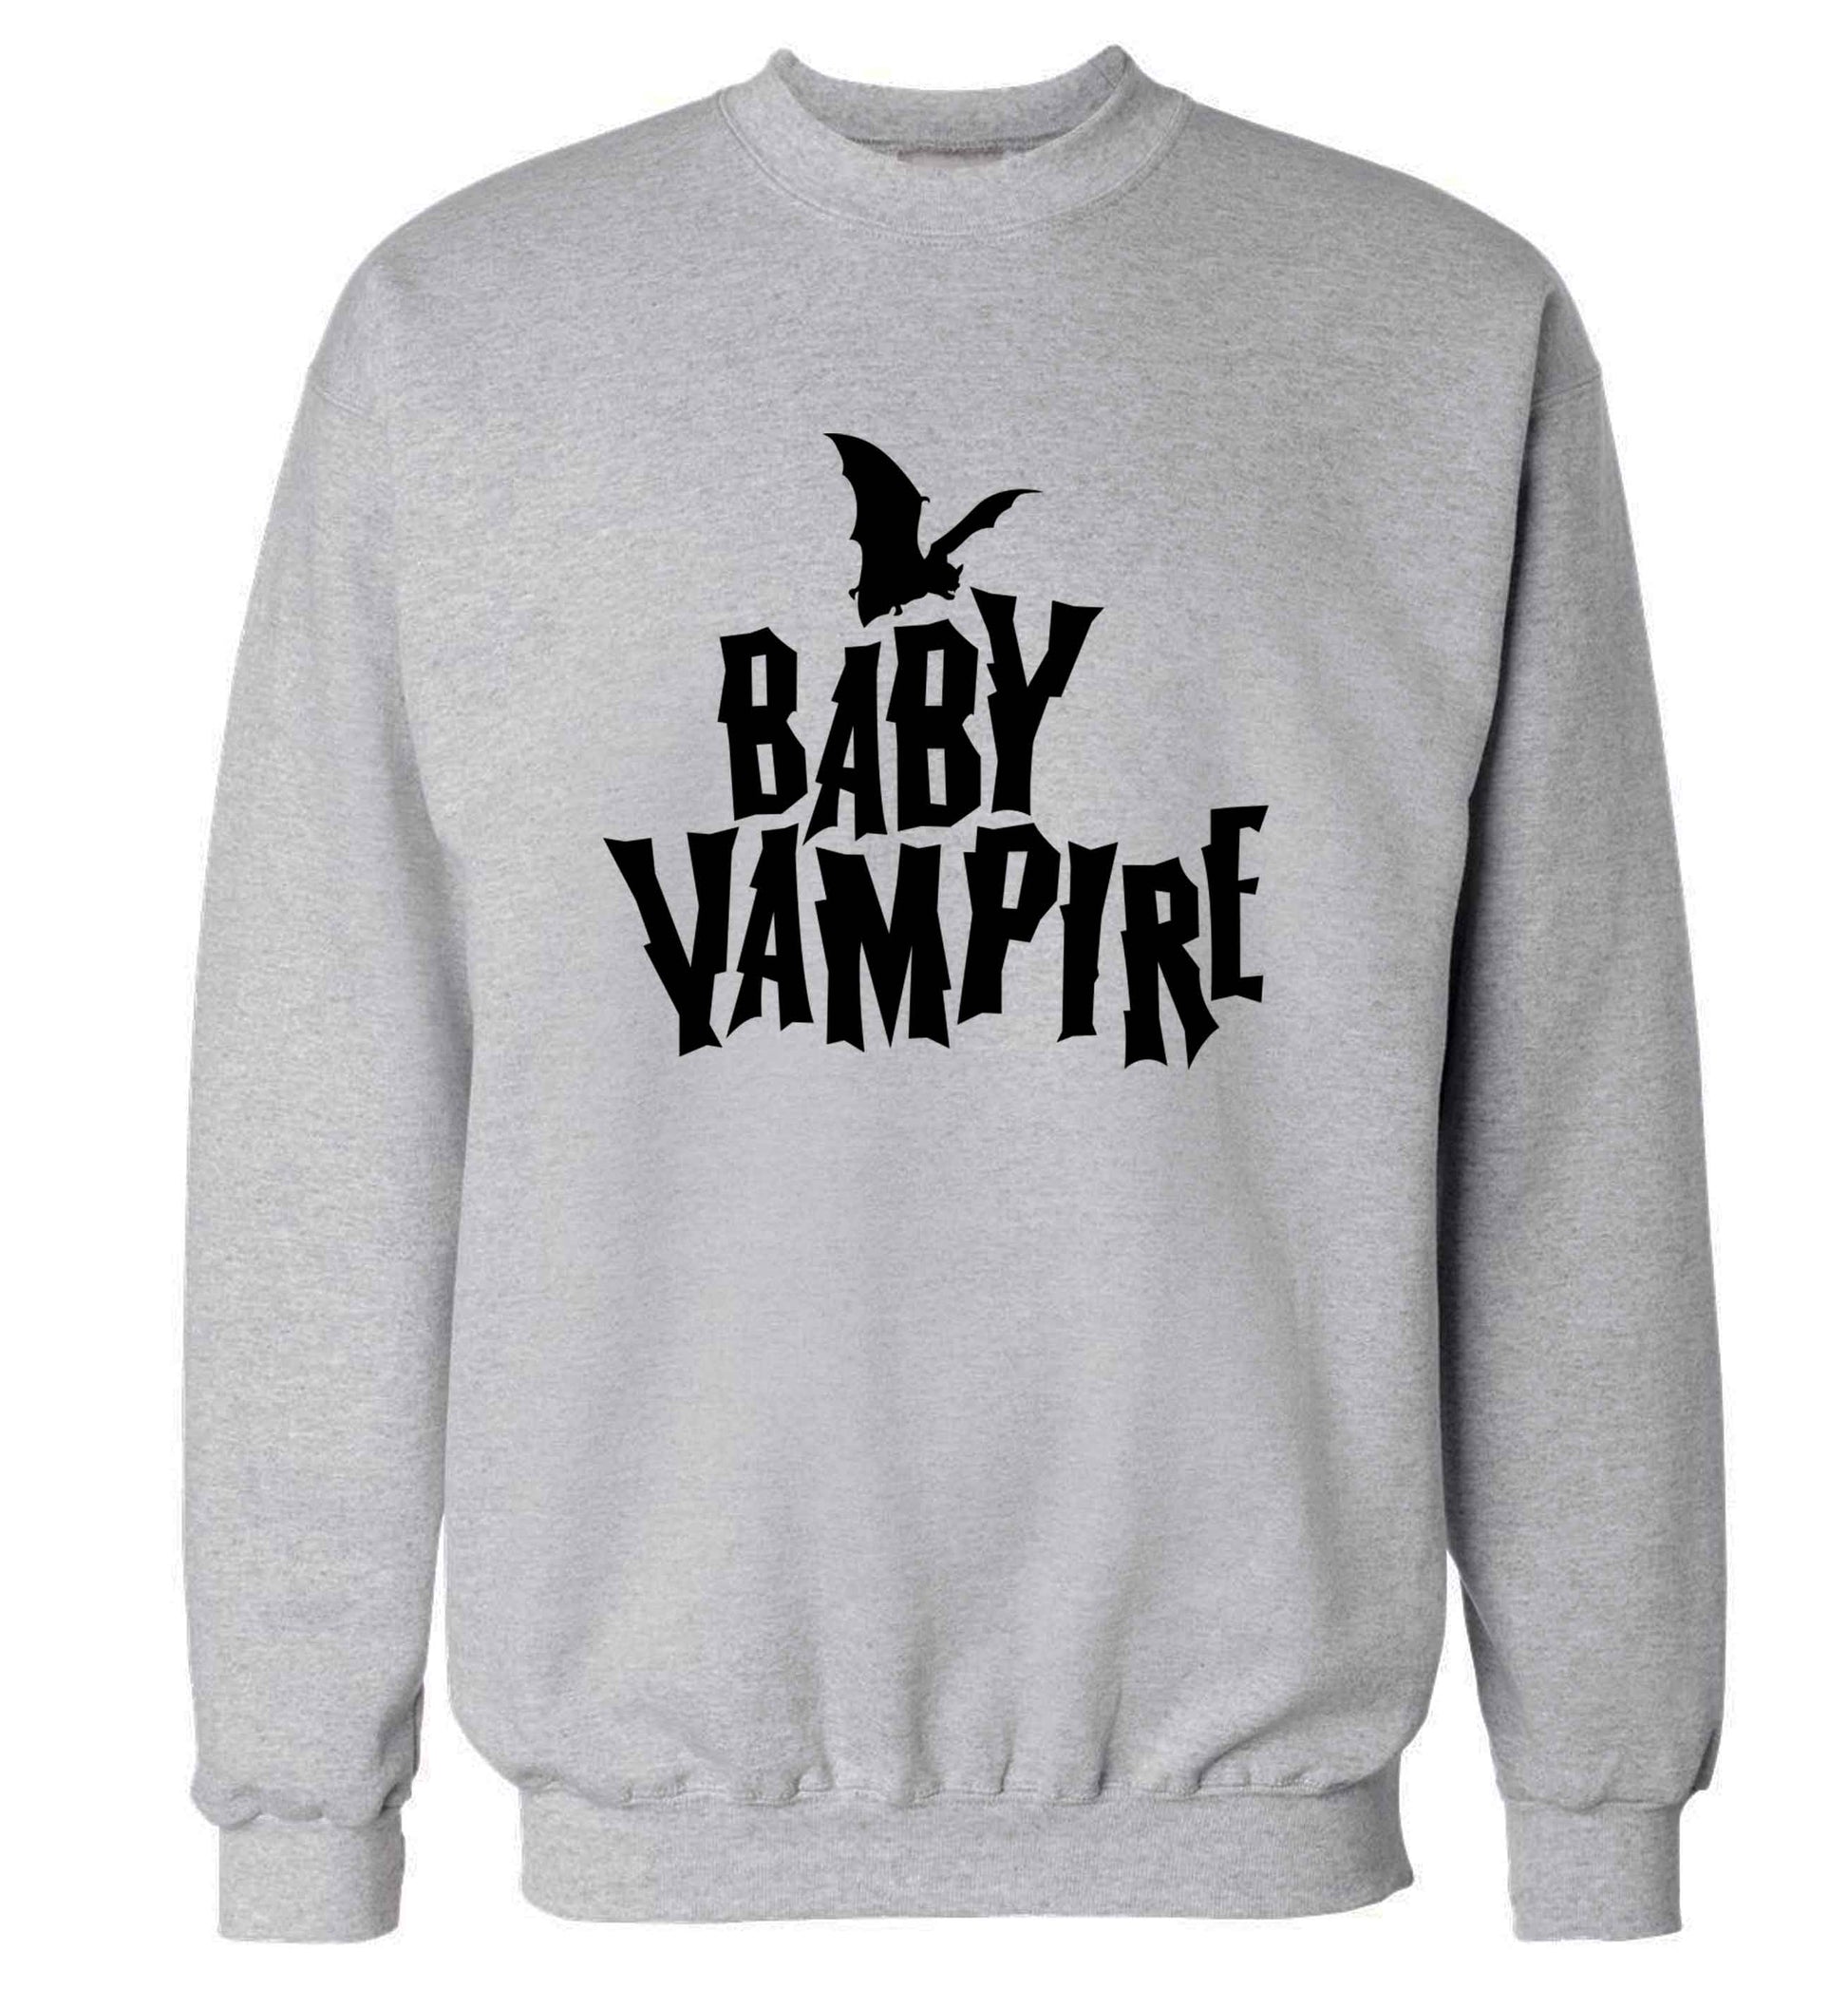 Baby vampire adult's unisex grey sweater 2XL